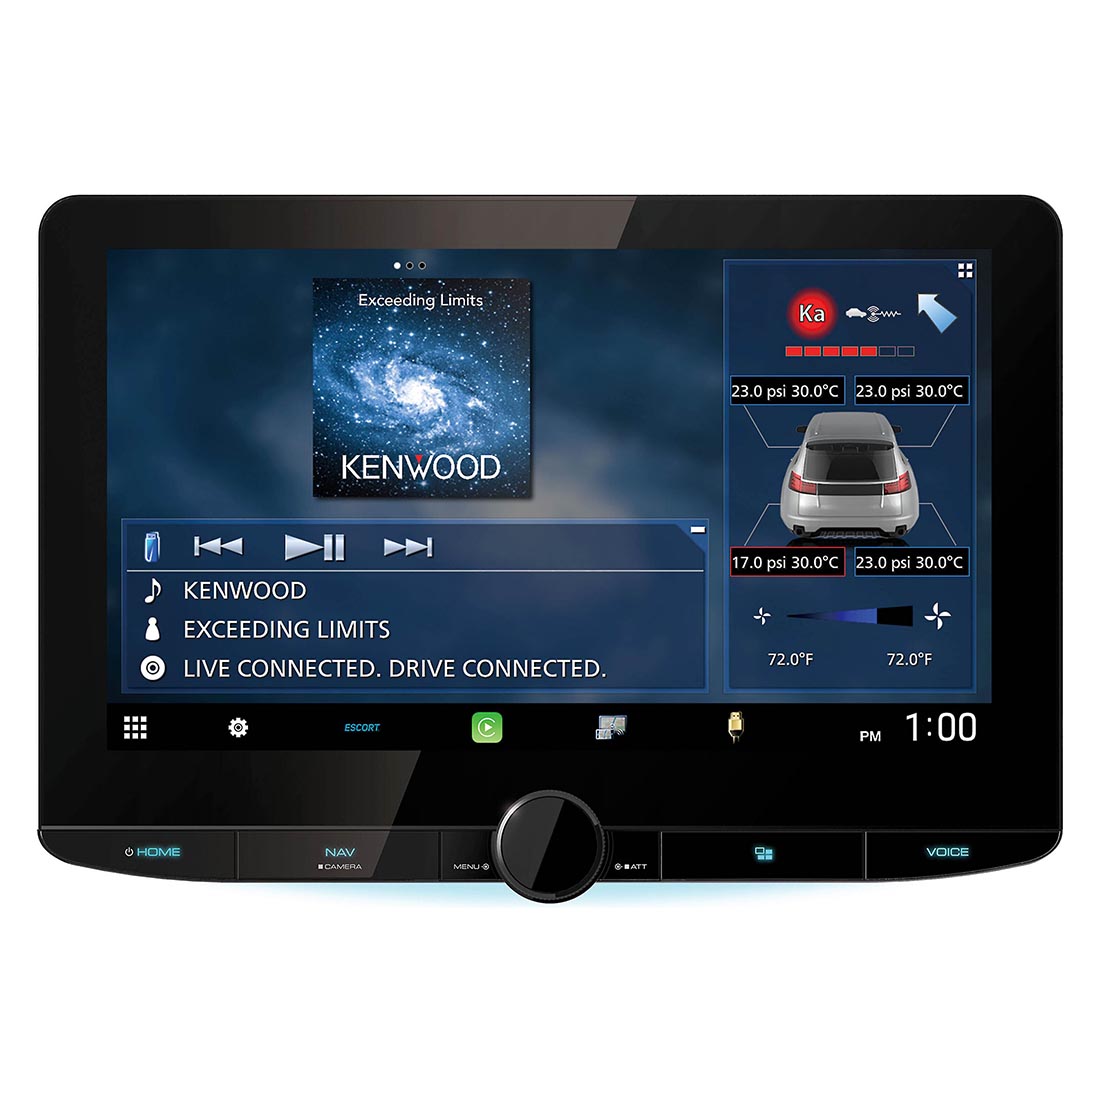 Kenwood DNR1008RVS 10.1" Digital Multimedia Receiver with Built-in Navigation